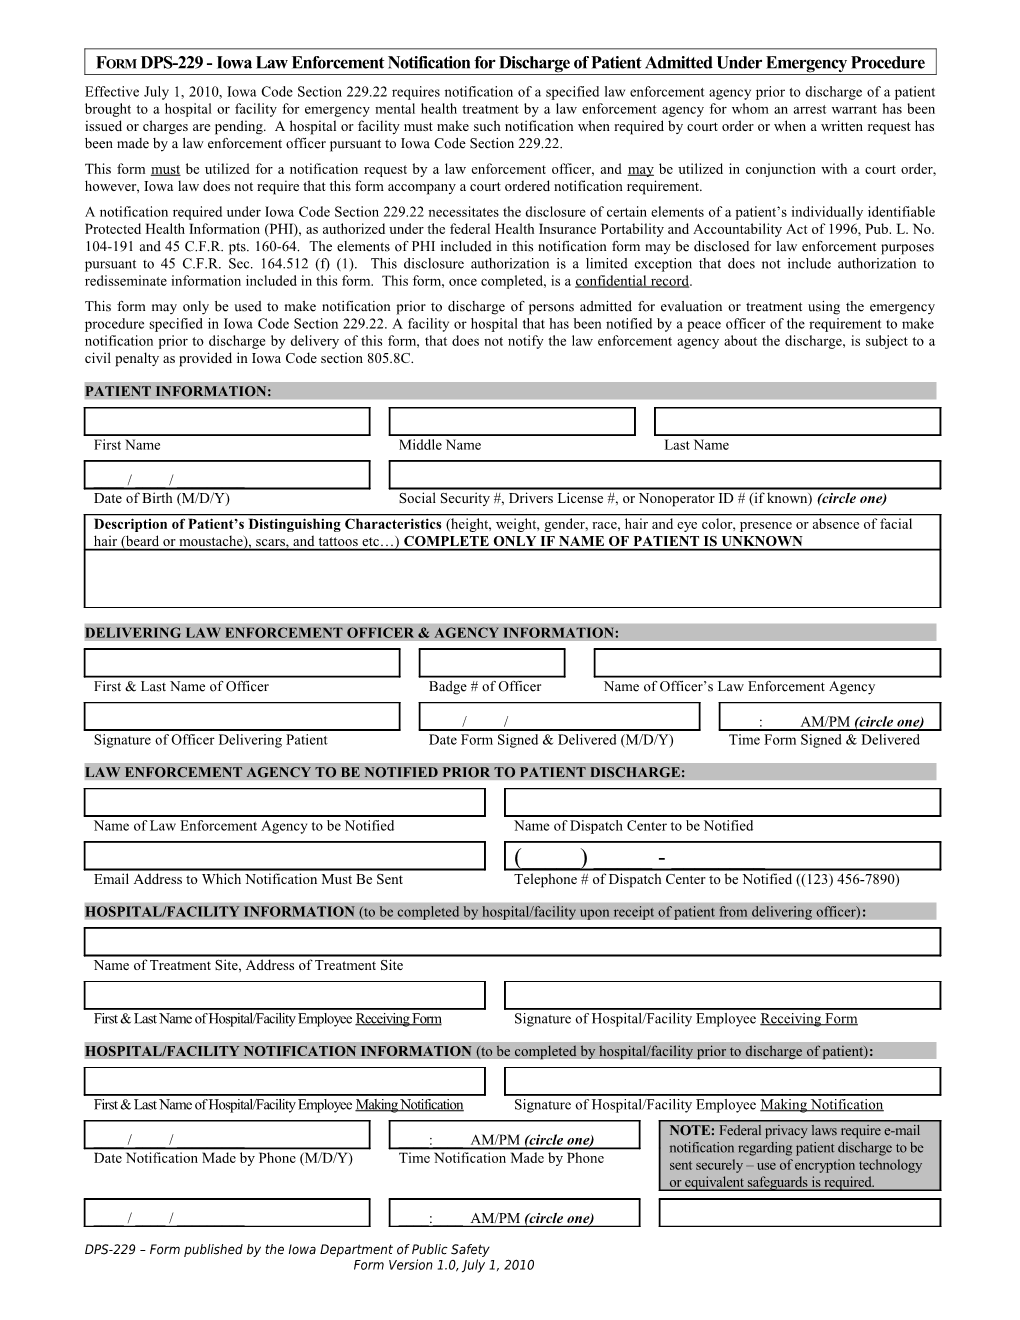 Iowa Law Enforcement Notification Form